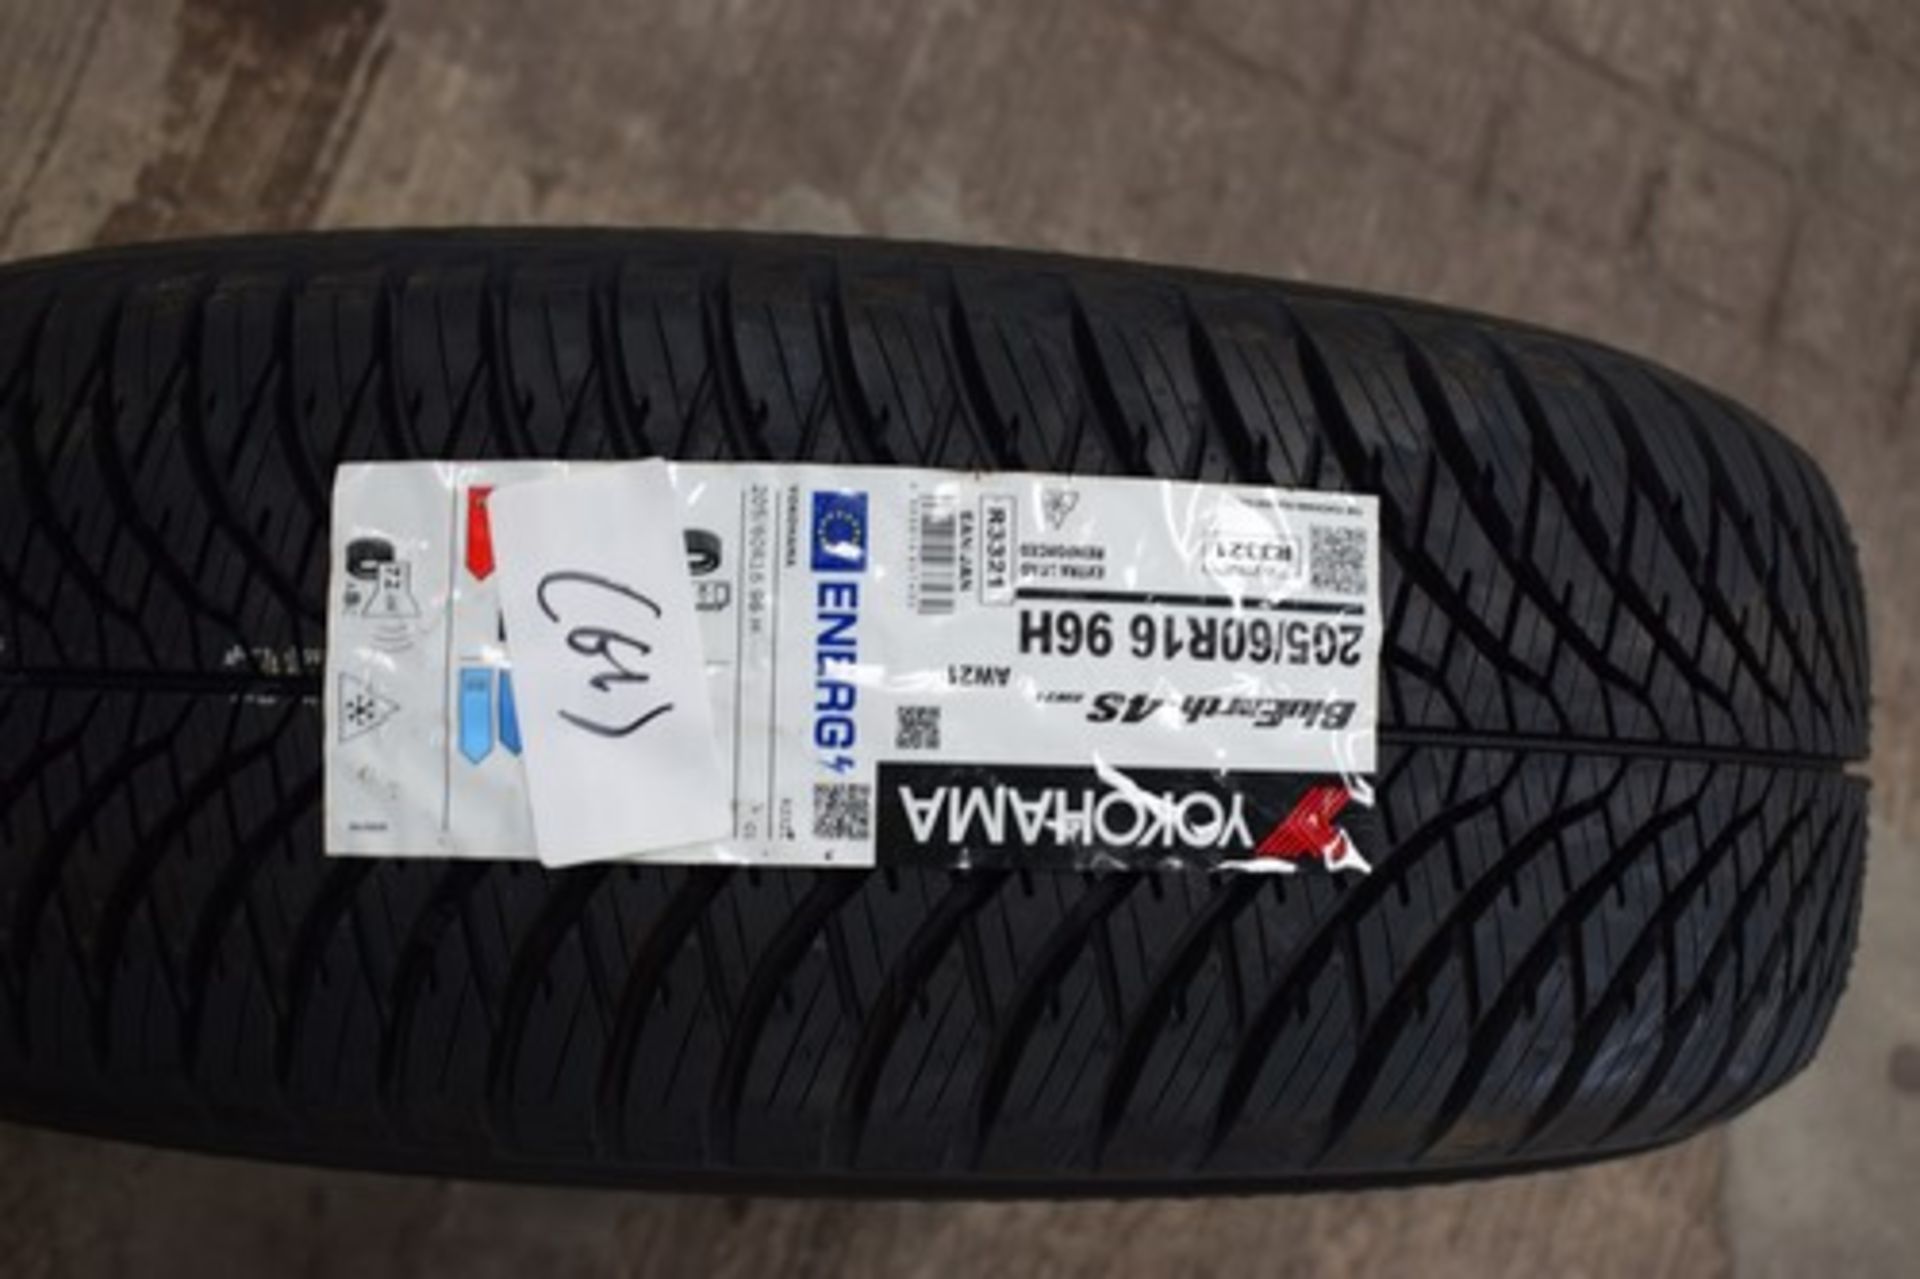 1 x Yokohama Bluearth 4S tyre, size 205/60 R16 96H XL - new with label (C5)(61)